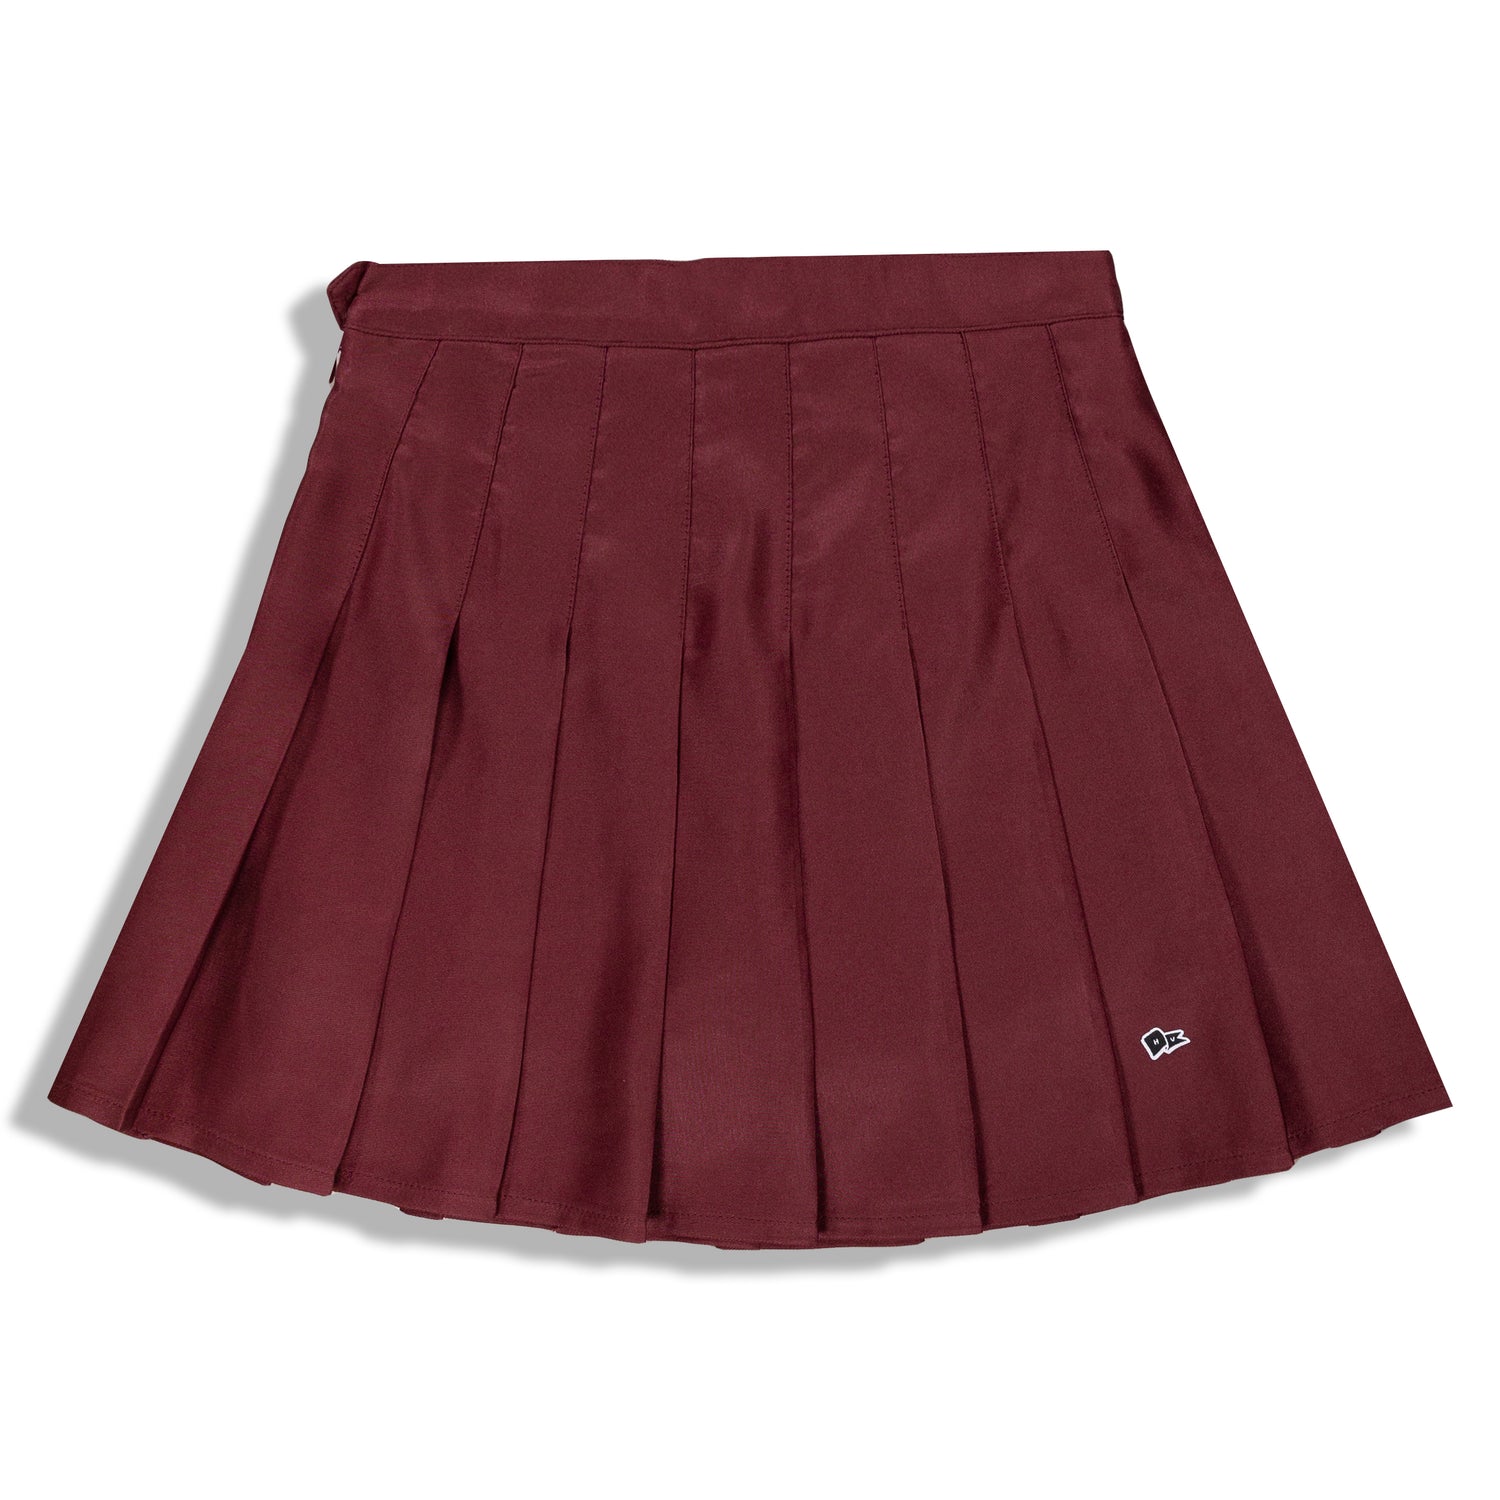 Tennis Skirt w Shorts